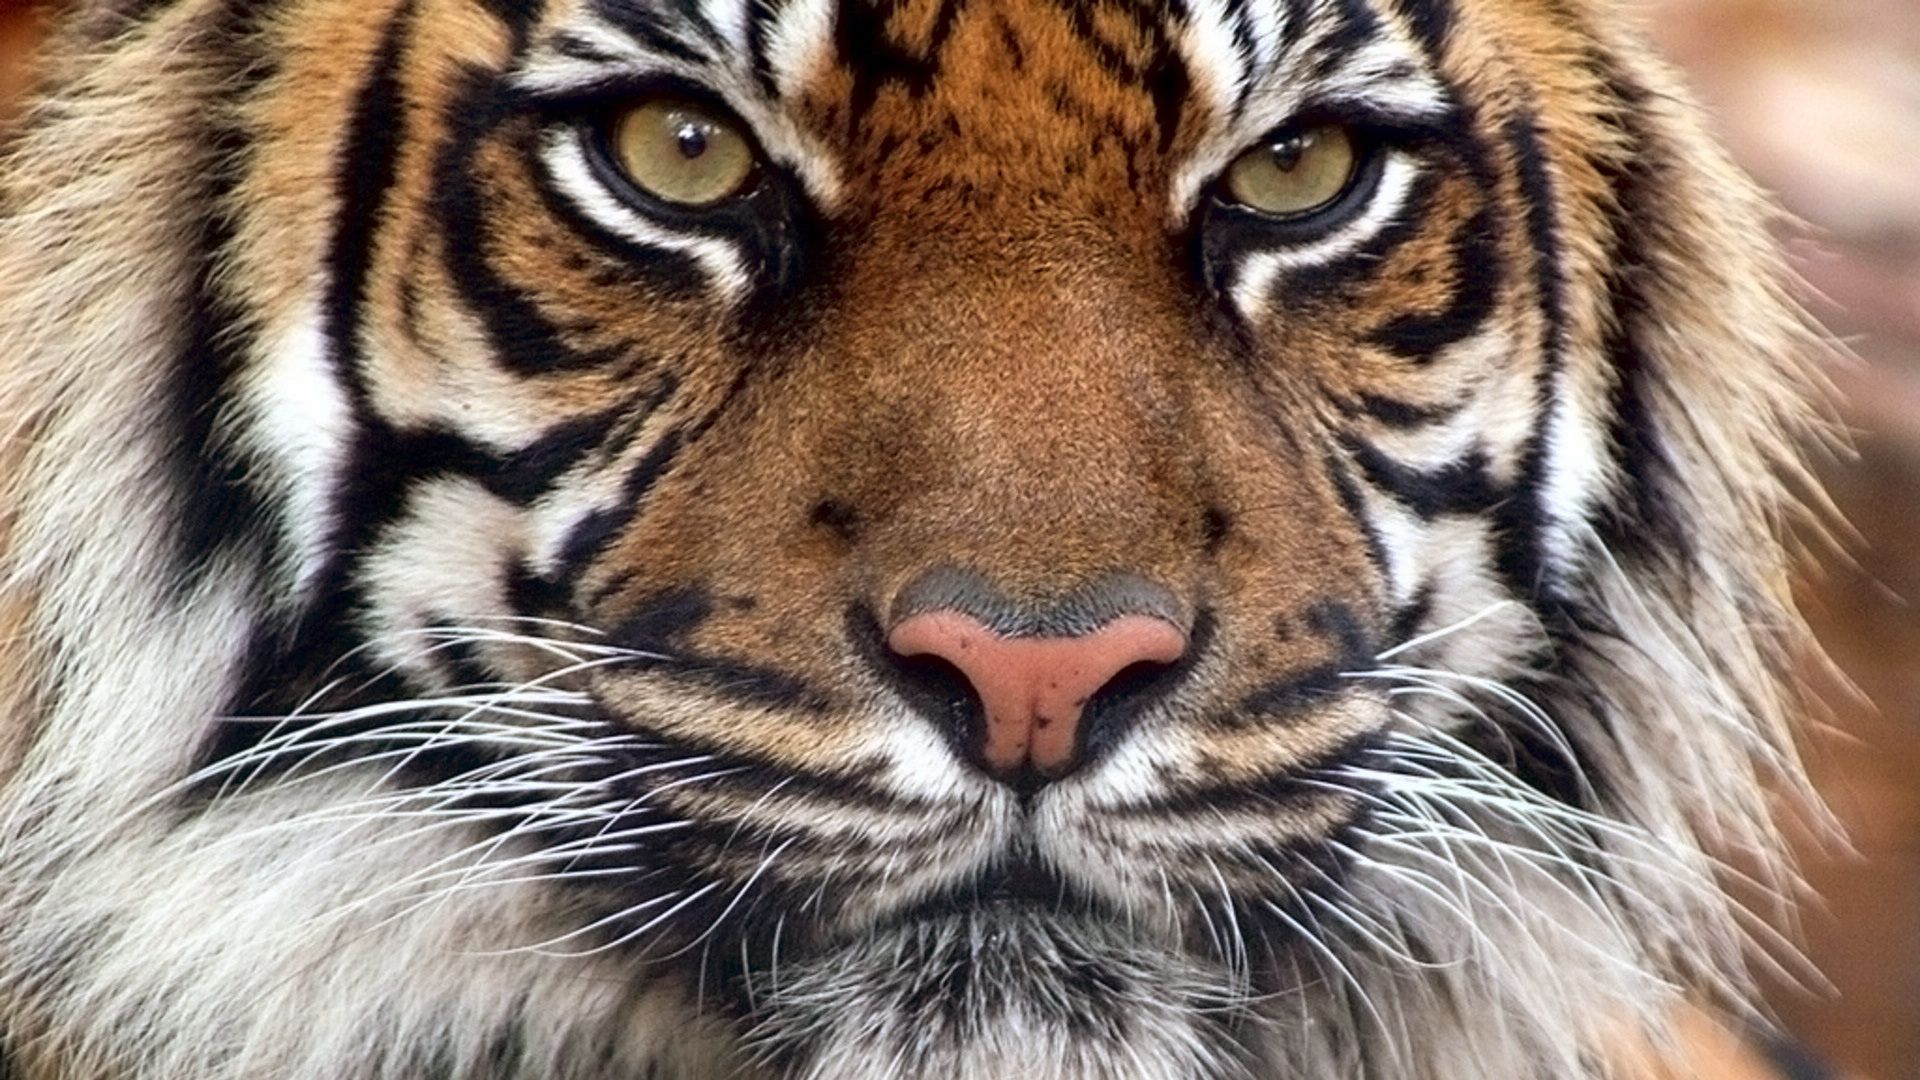 HD Quality Tiger Bengal Face Wallpaper - SiWallpaper 20557